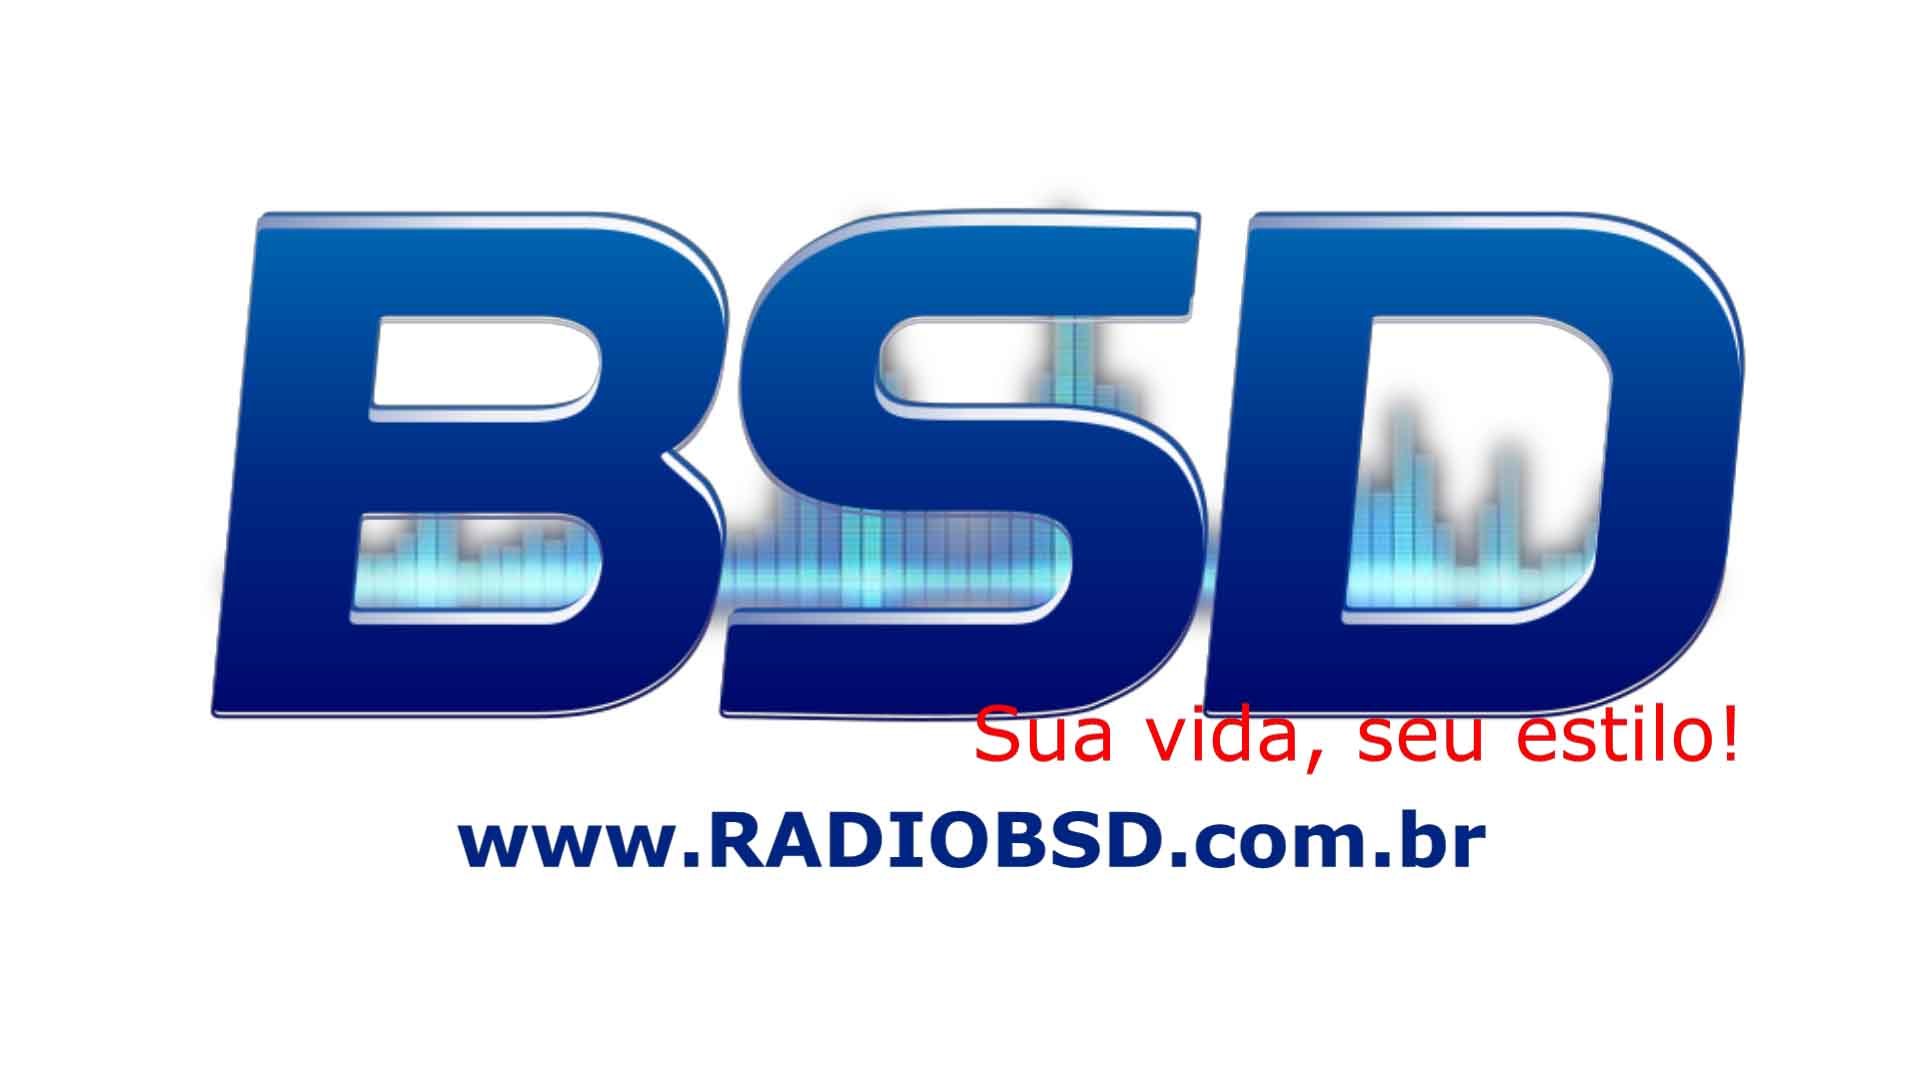 Rádio BSD